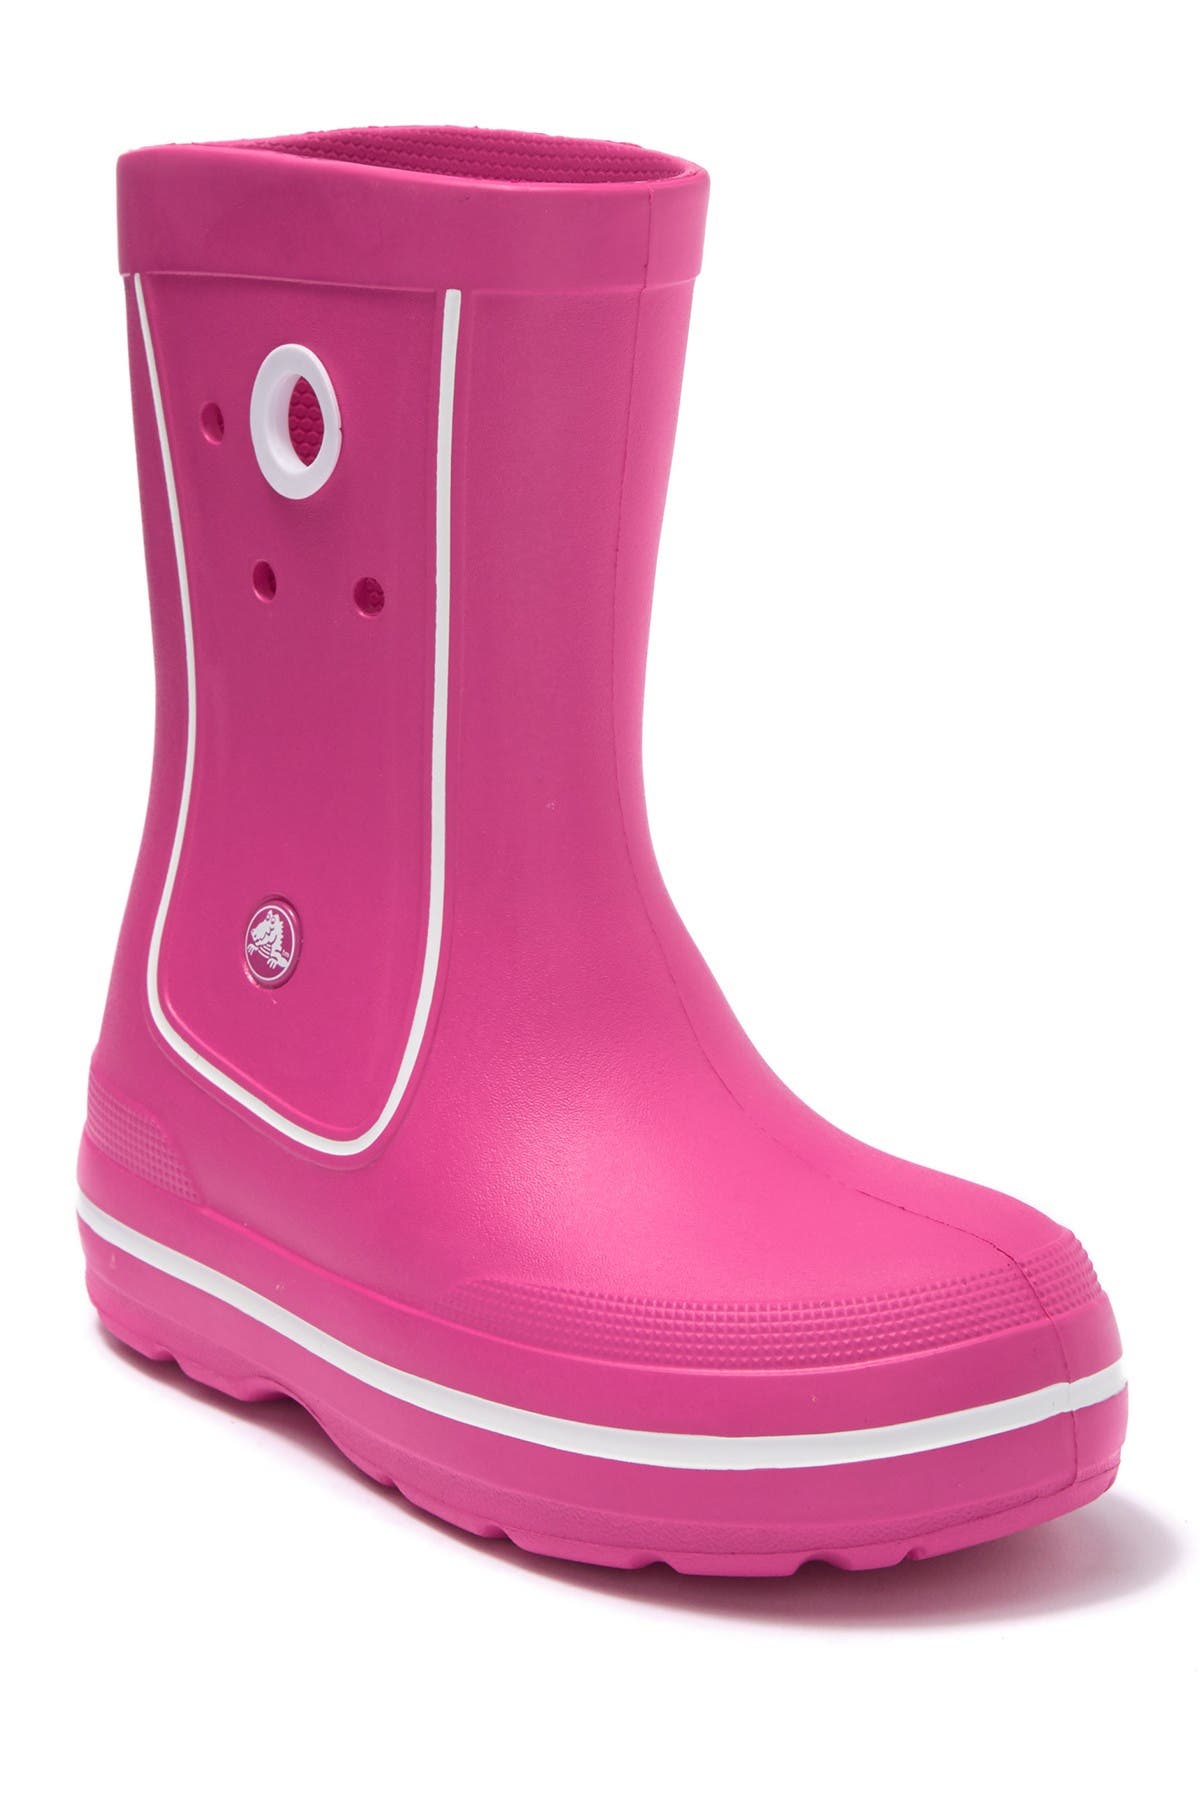 crocs women's crocband jaunt rain boot